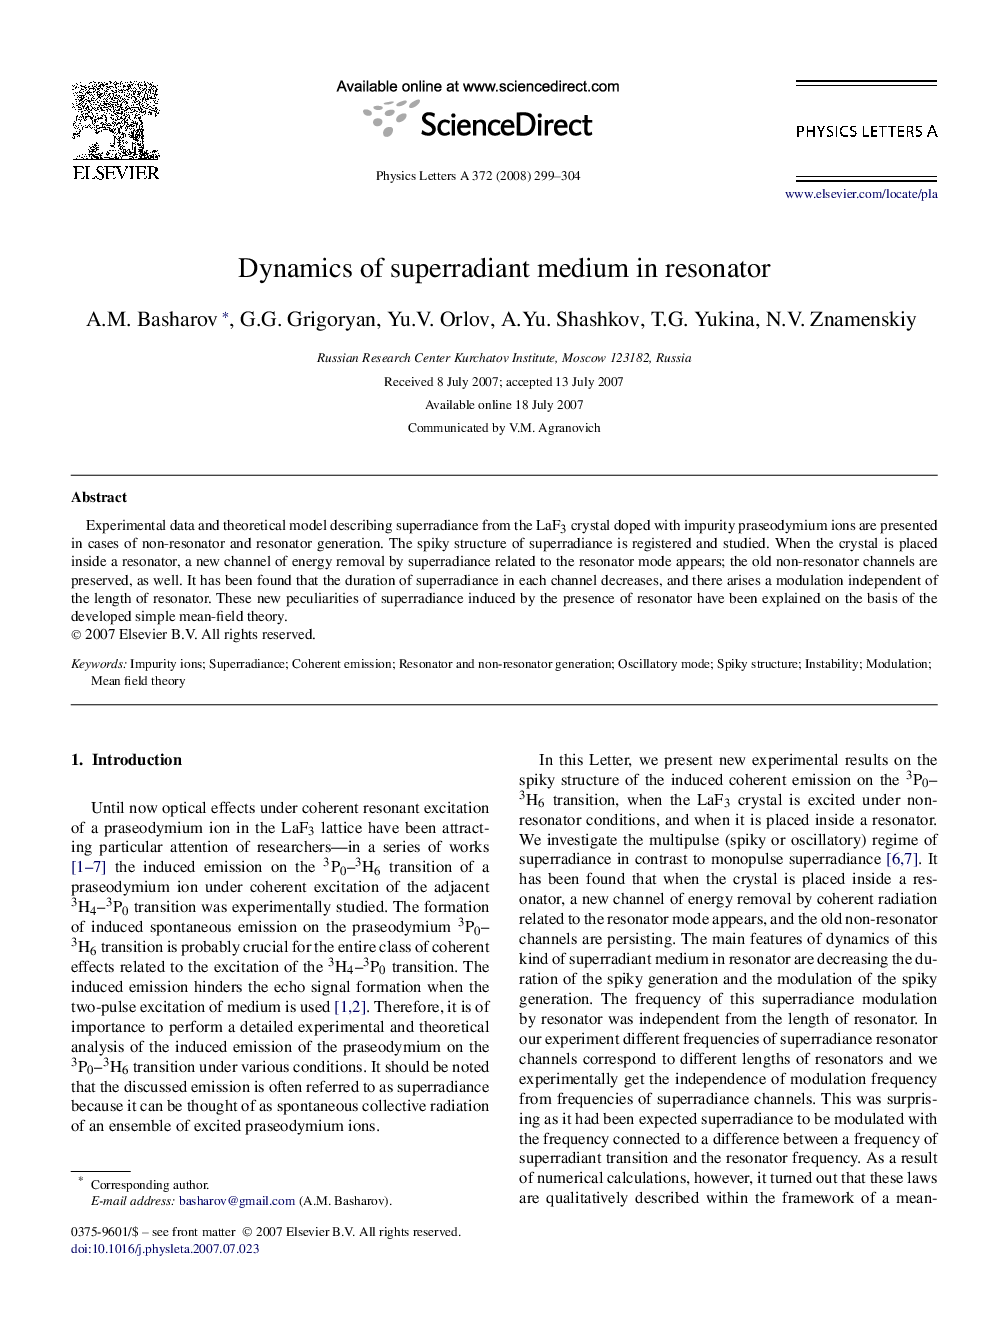 Dynamics of superradiant medium in resonator